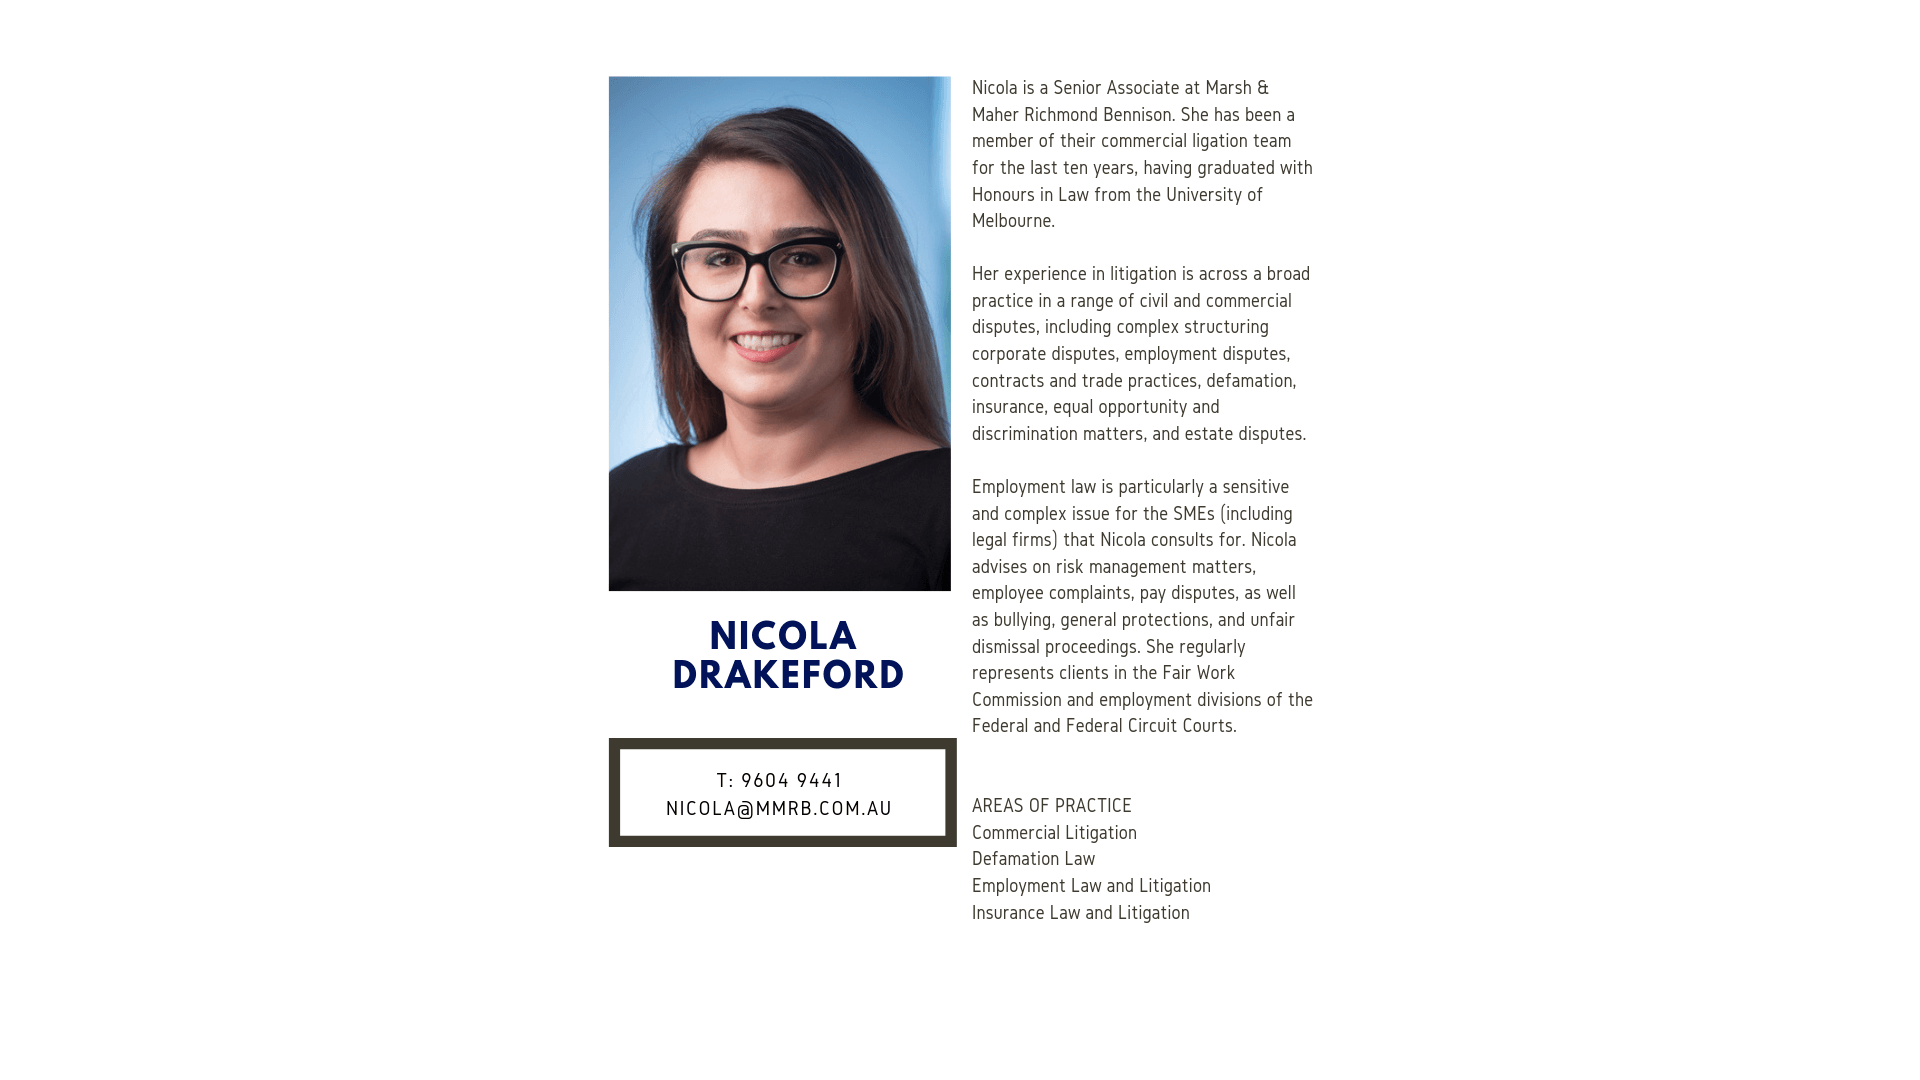 Nicola Drakeford - employment law specialist